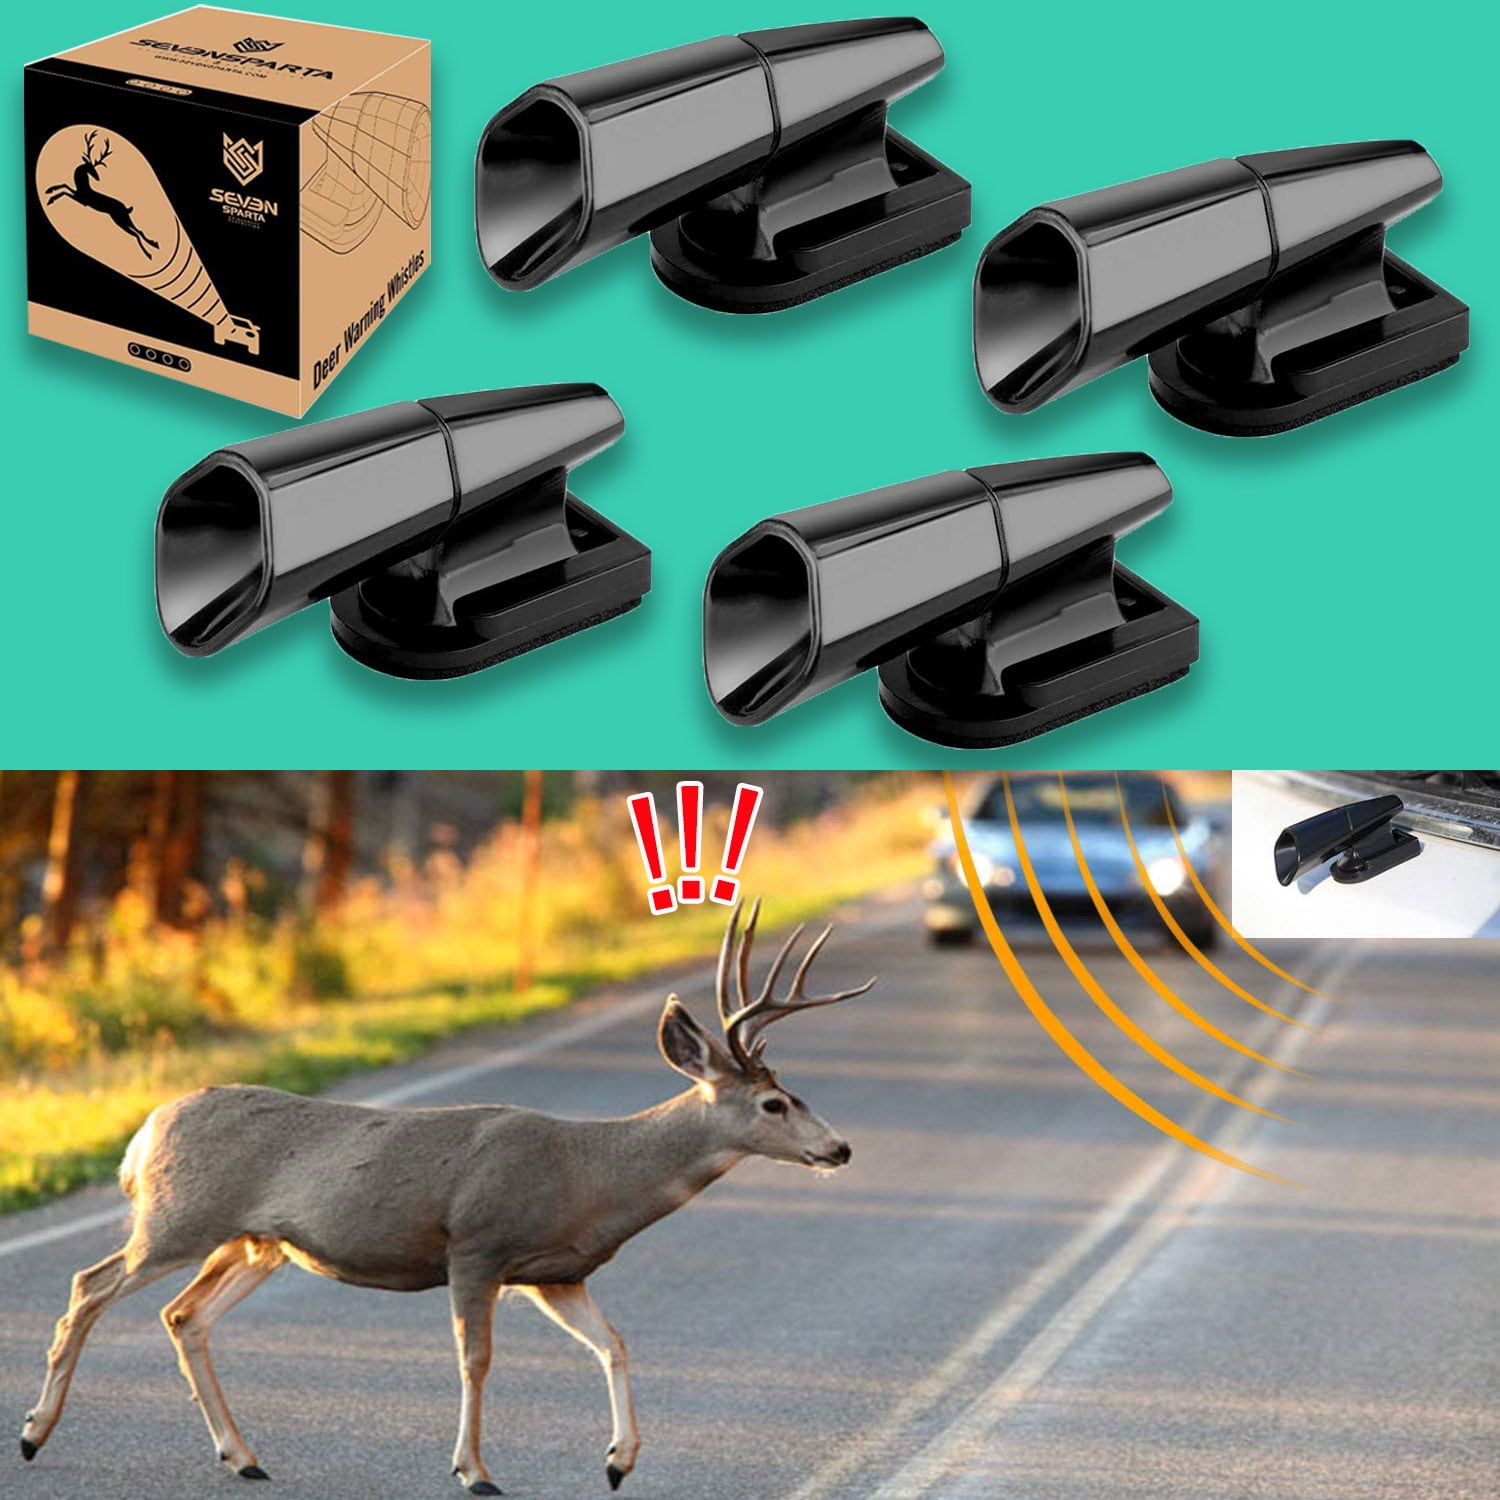 Animal (Deer) Warning Ultrasonic Horn Alarm BK 7305286